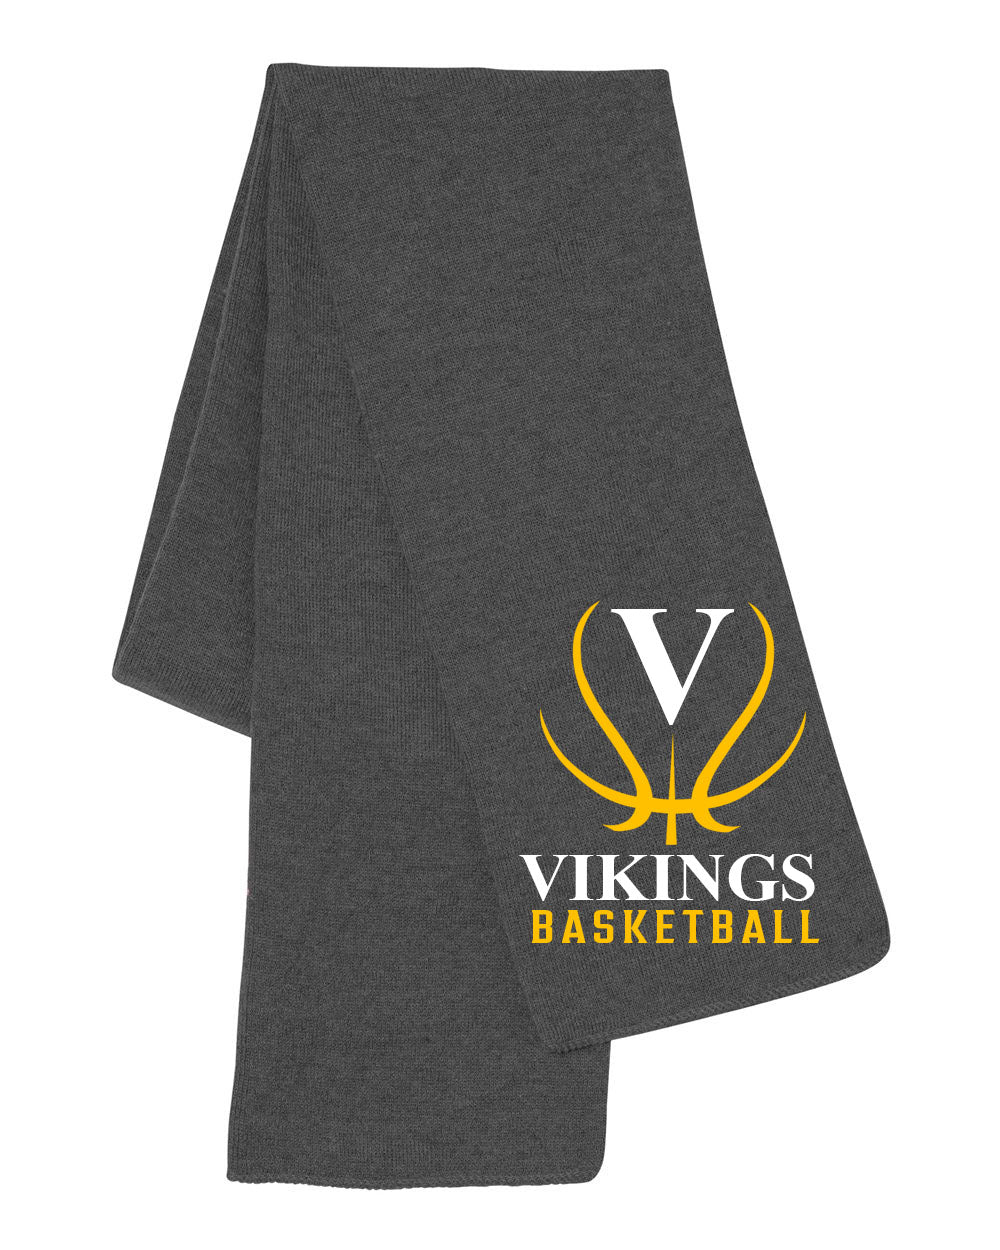 Vikings Basketball design 3 Scarf